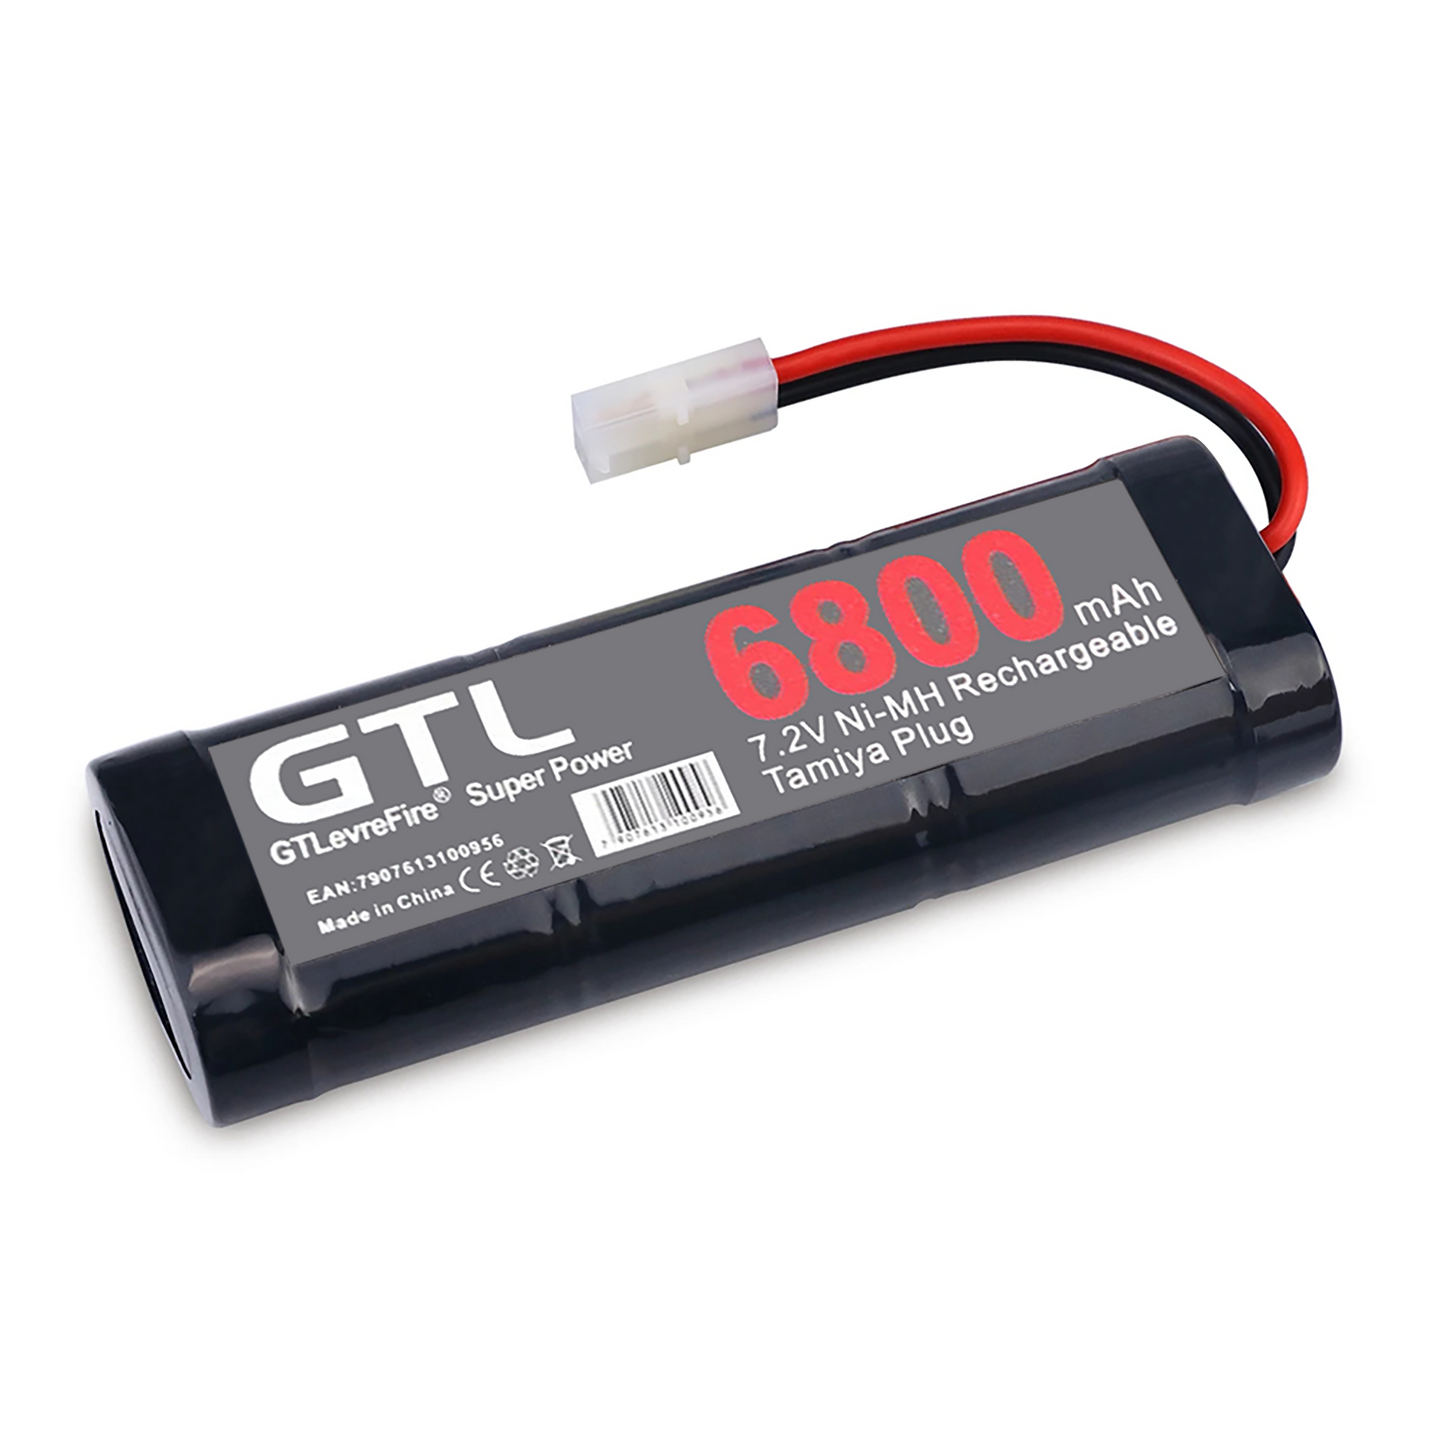 8 (€ Jn 6800 mAh Rechargeable GTL Ni-MH Plug 